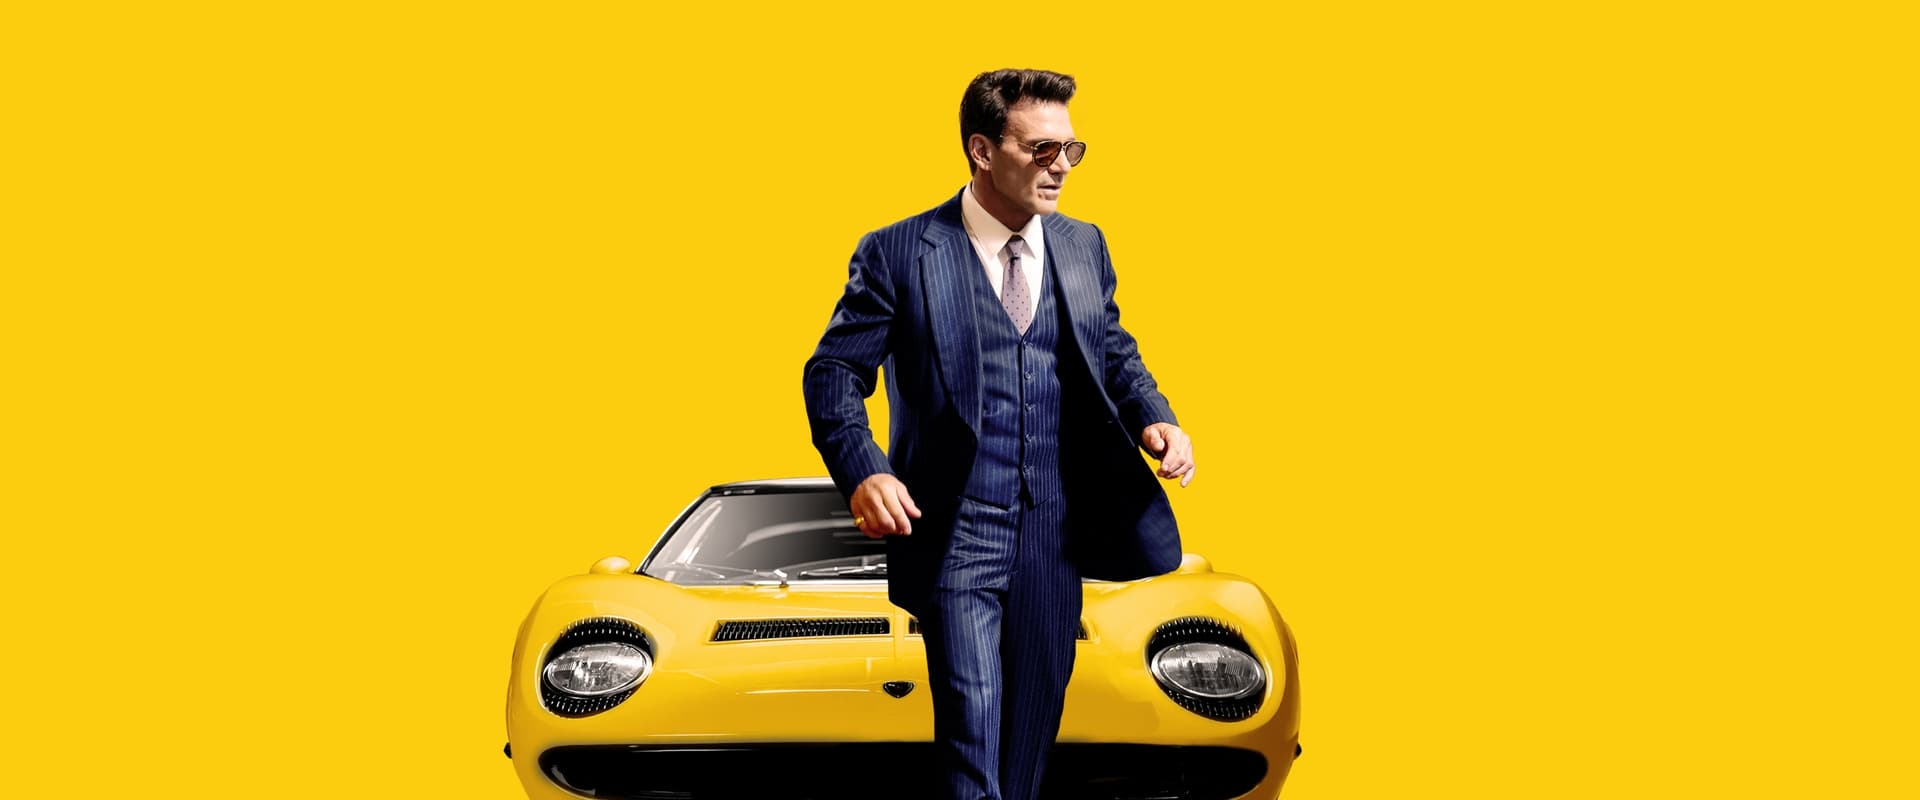 Lamborghini - L'uomo dietro la leggenda